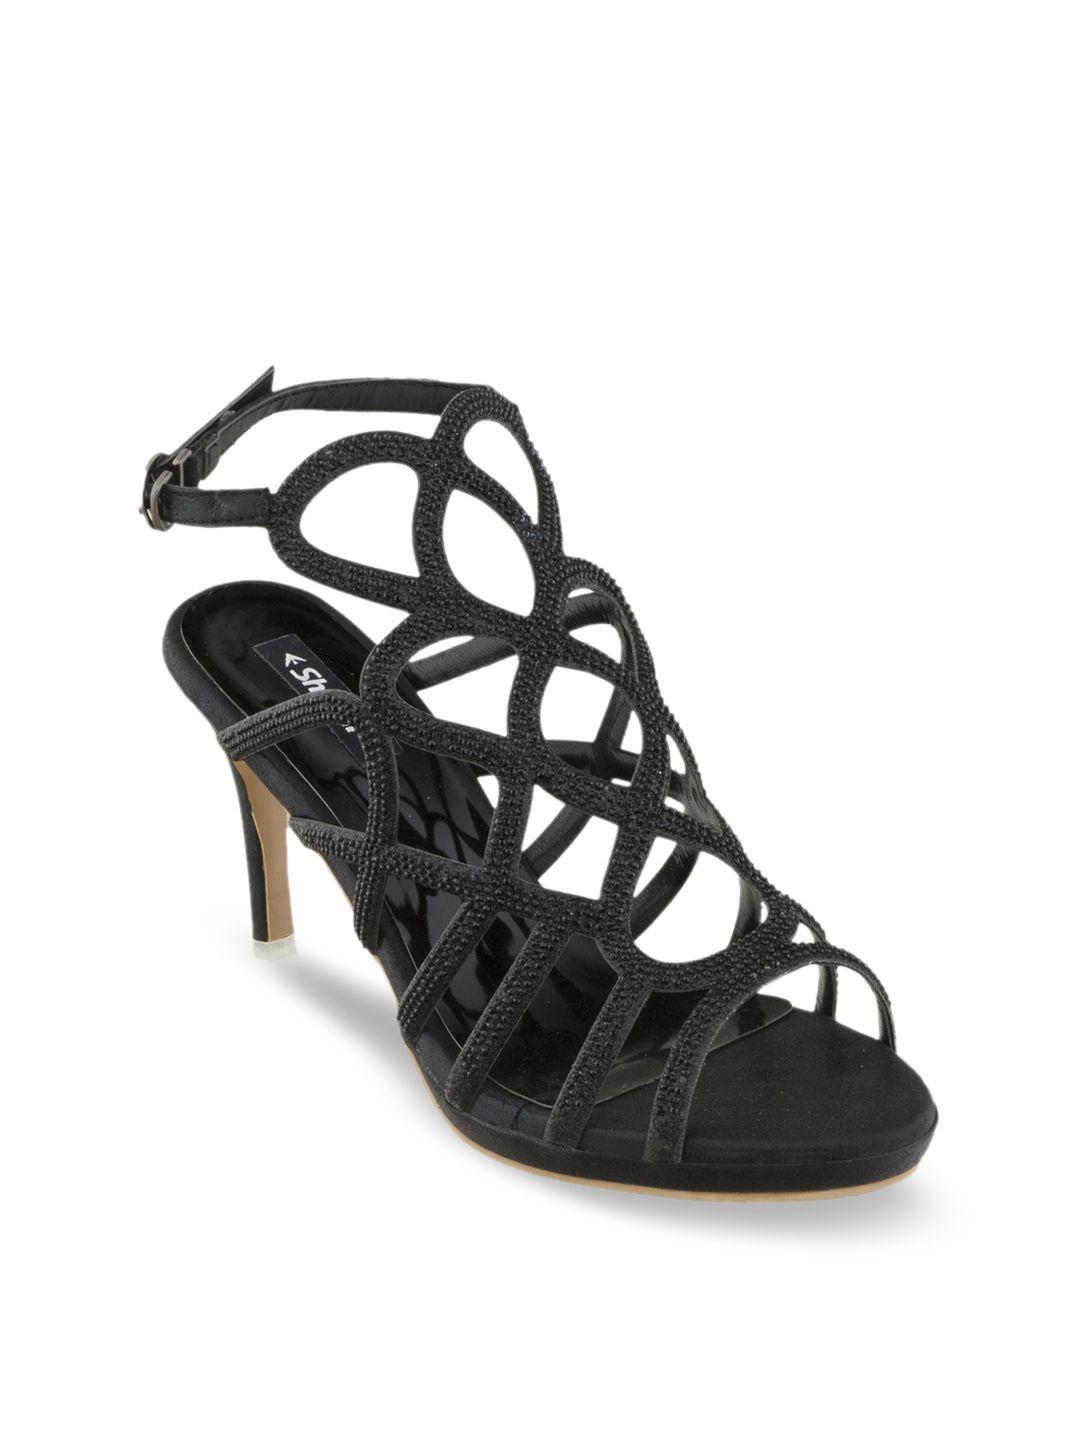 sherrif shoes women black solid heels